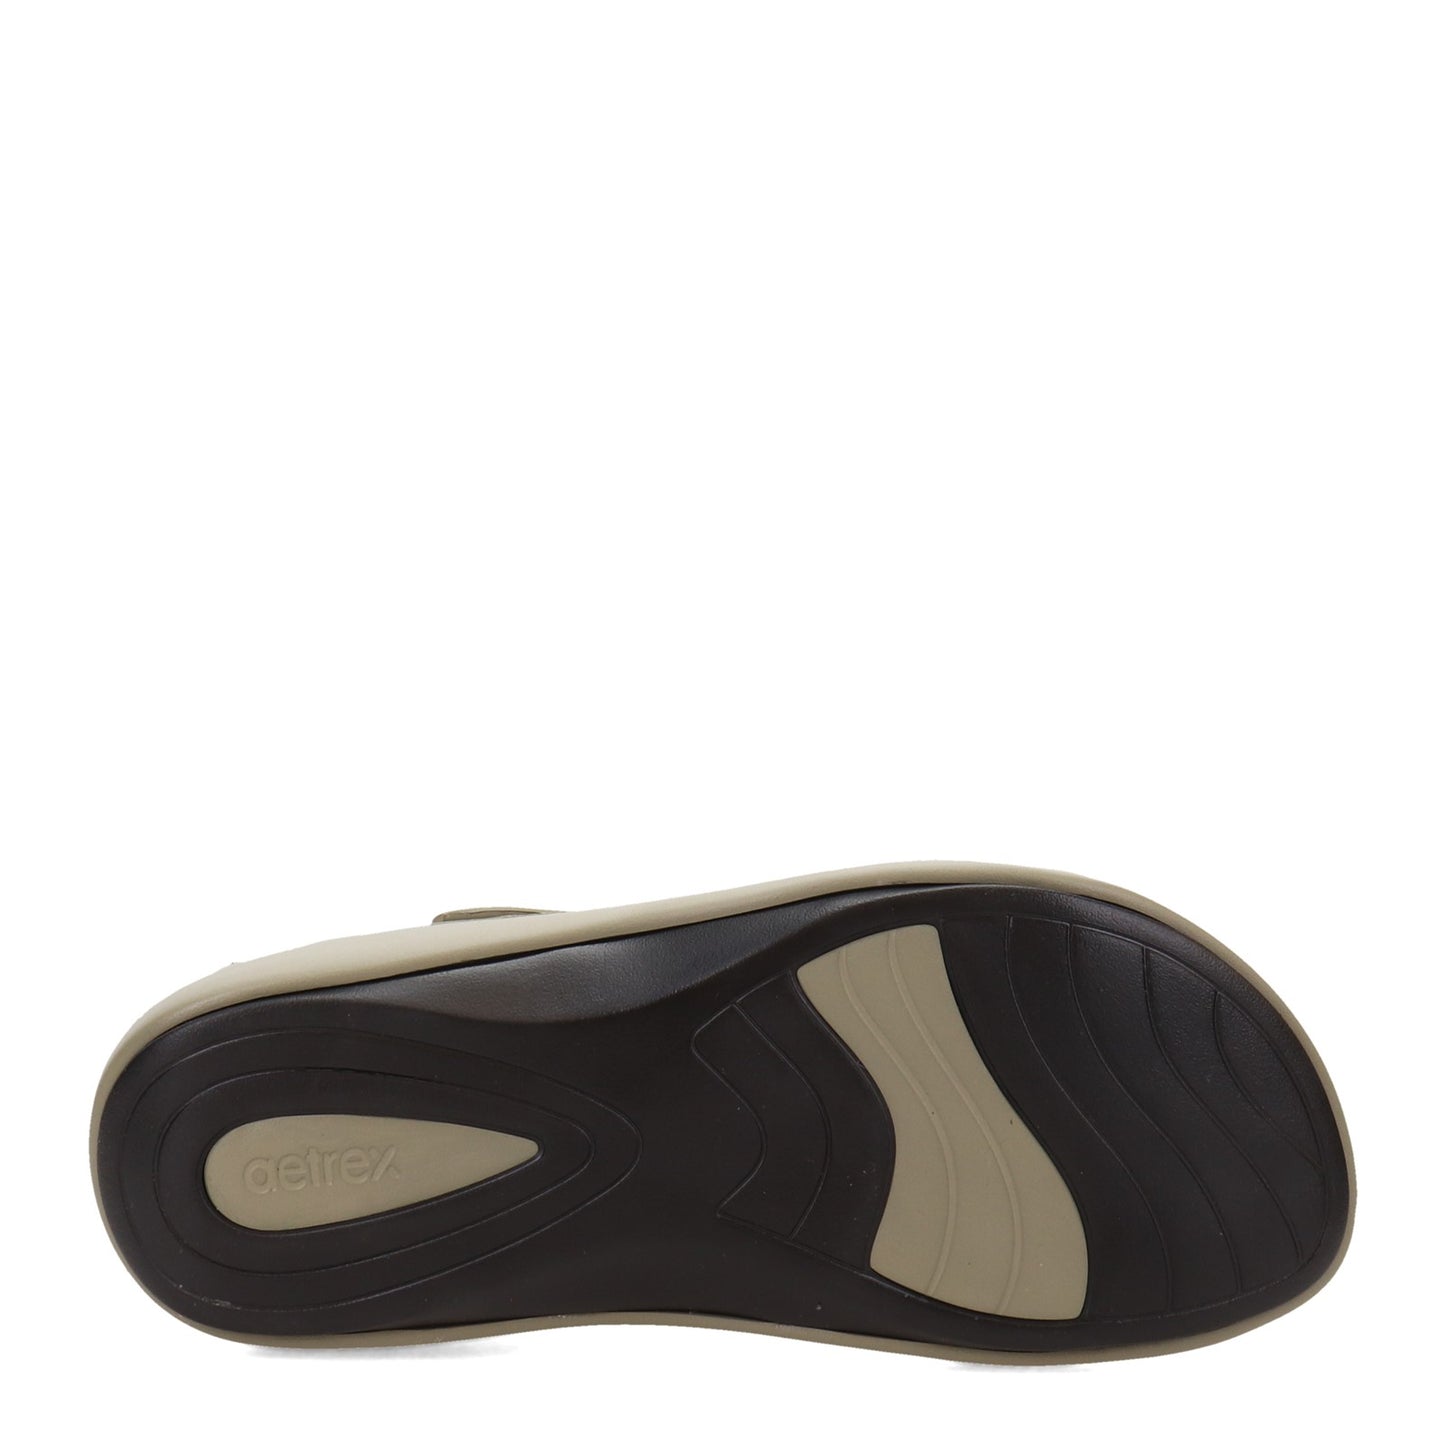 Peltz Shoes  Women's Aetrex Jillian Sport Sandal SAGE L8007W